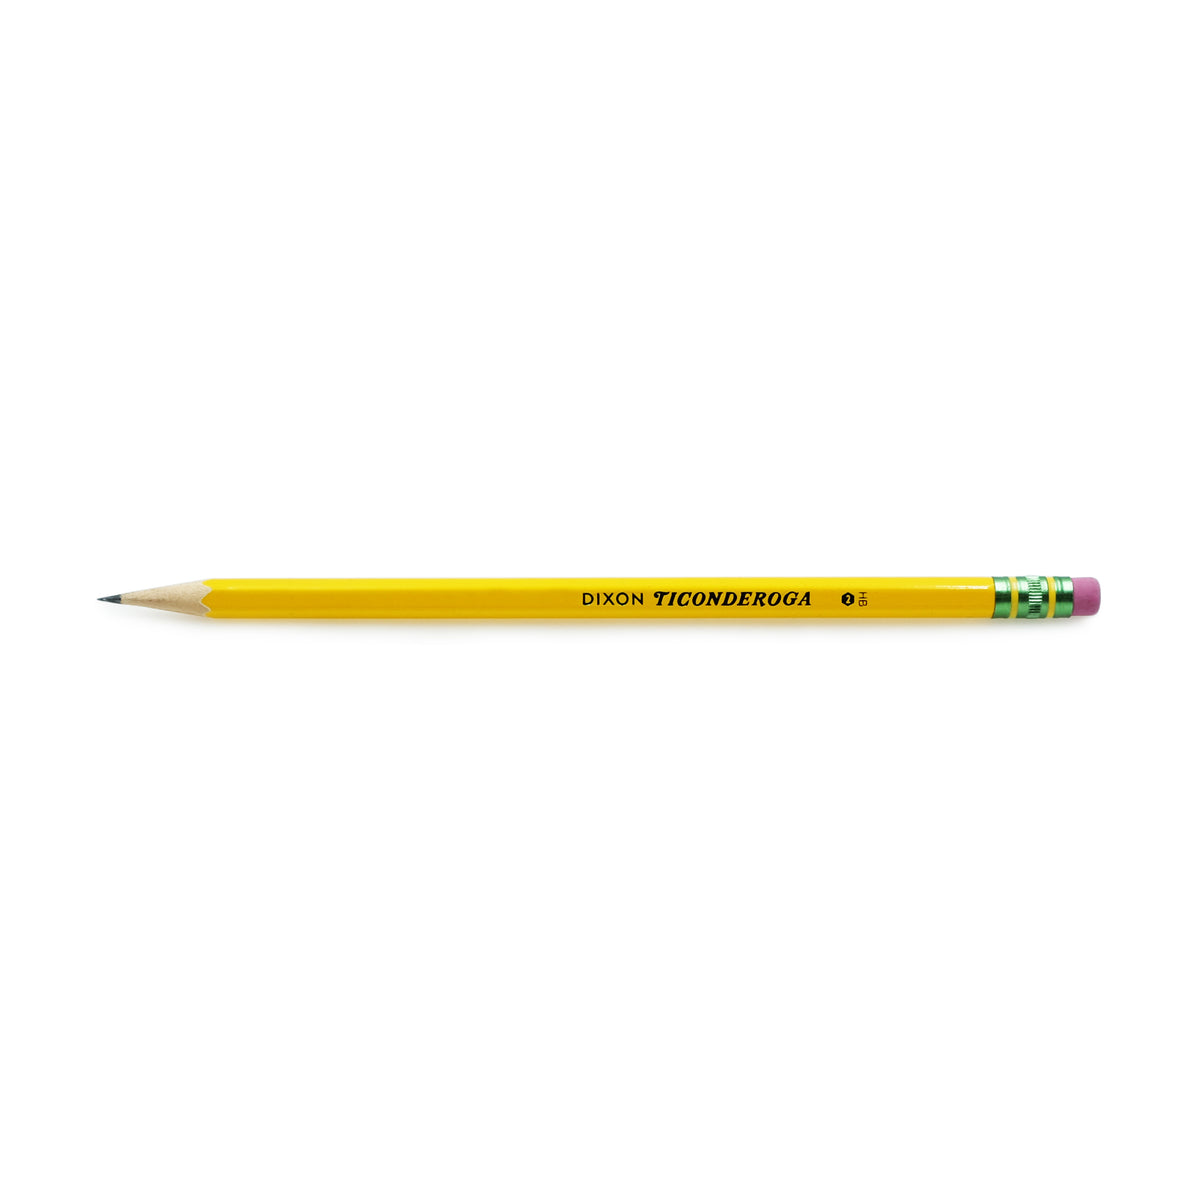 ArtSnacks x Dixon Ticonderoga #2 Pencil